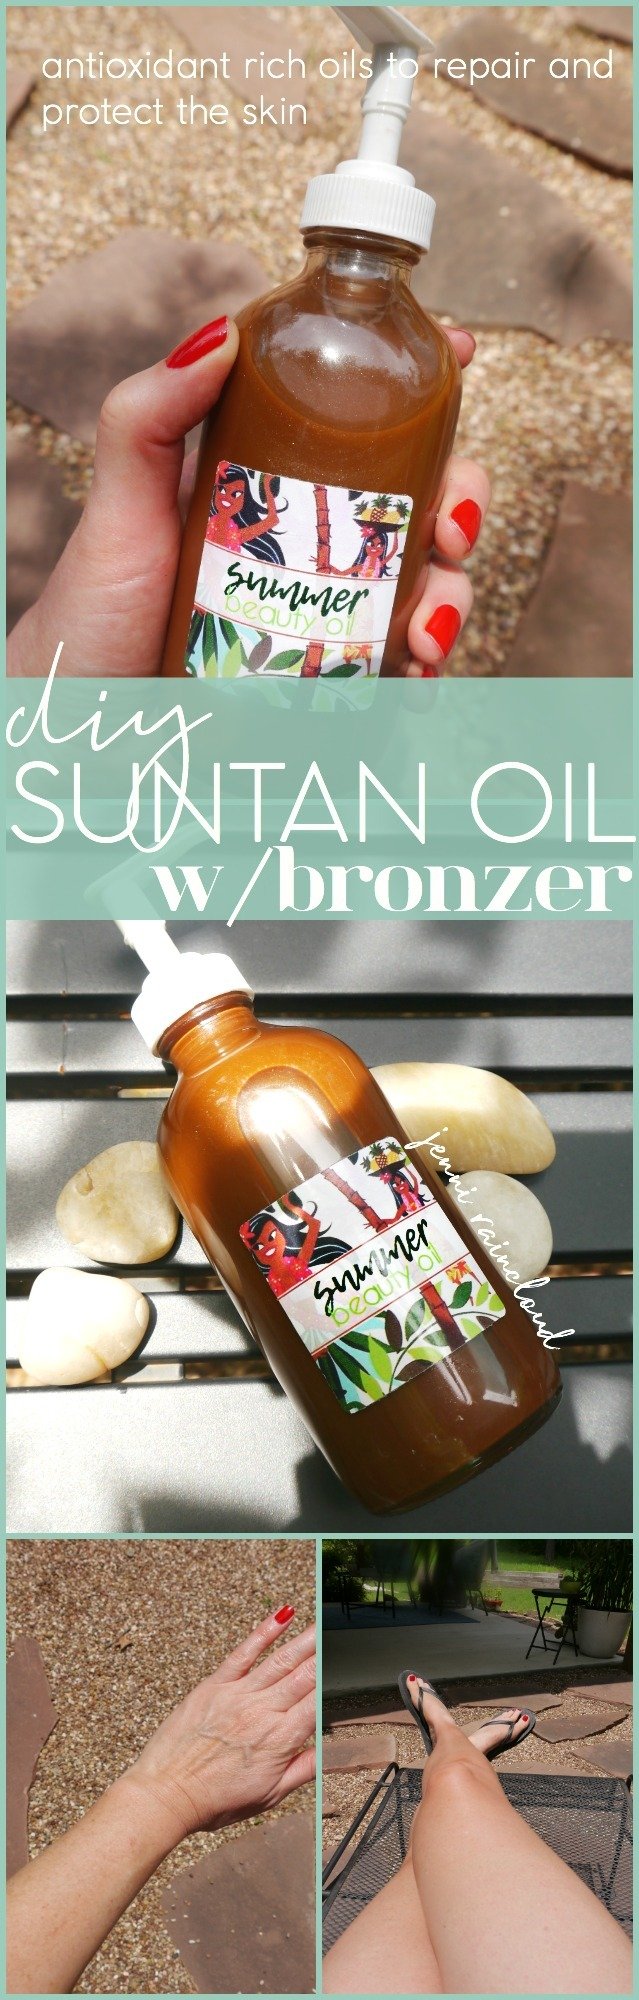 DIY Suntan Oil with bronzer